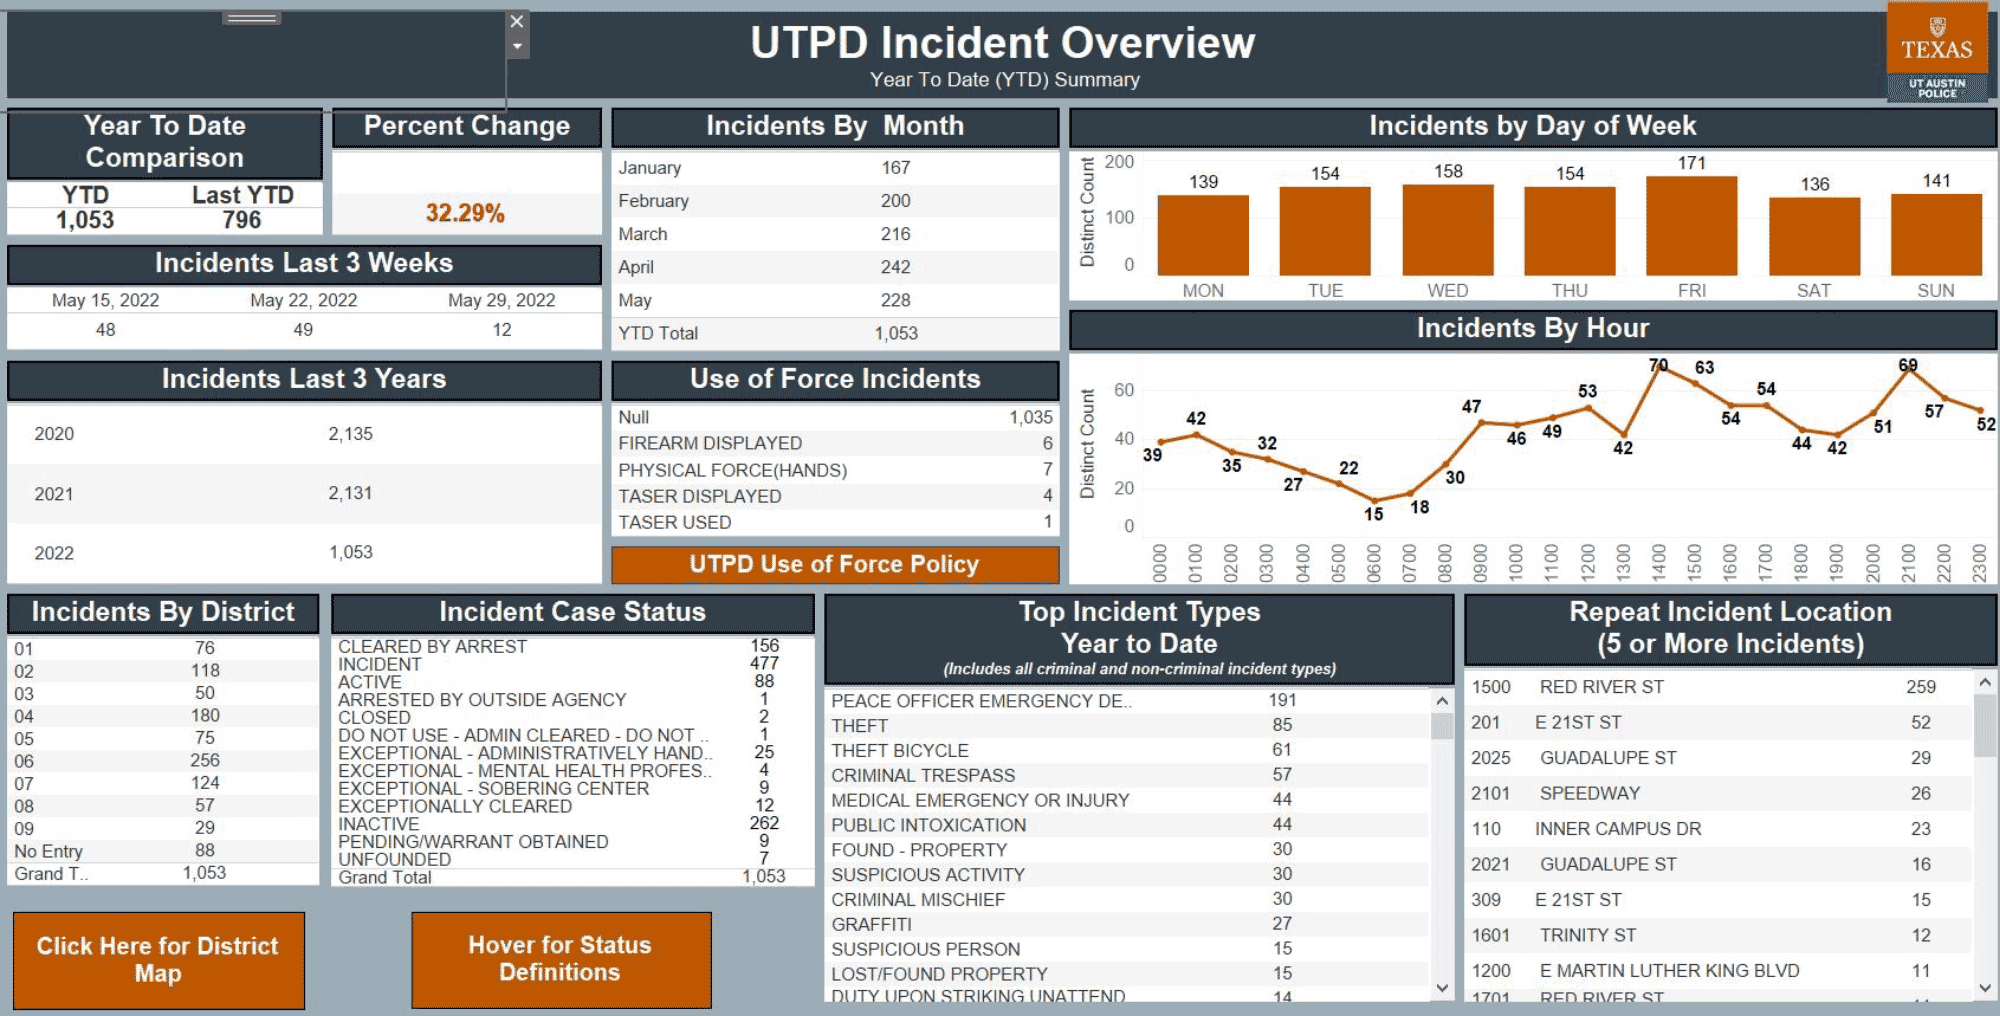 UTPD Incident Overview